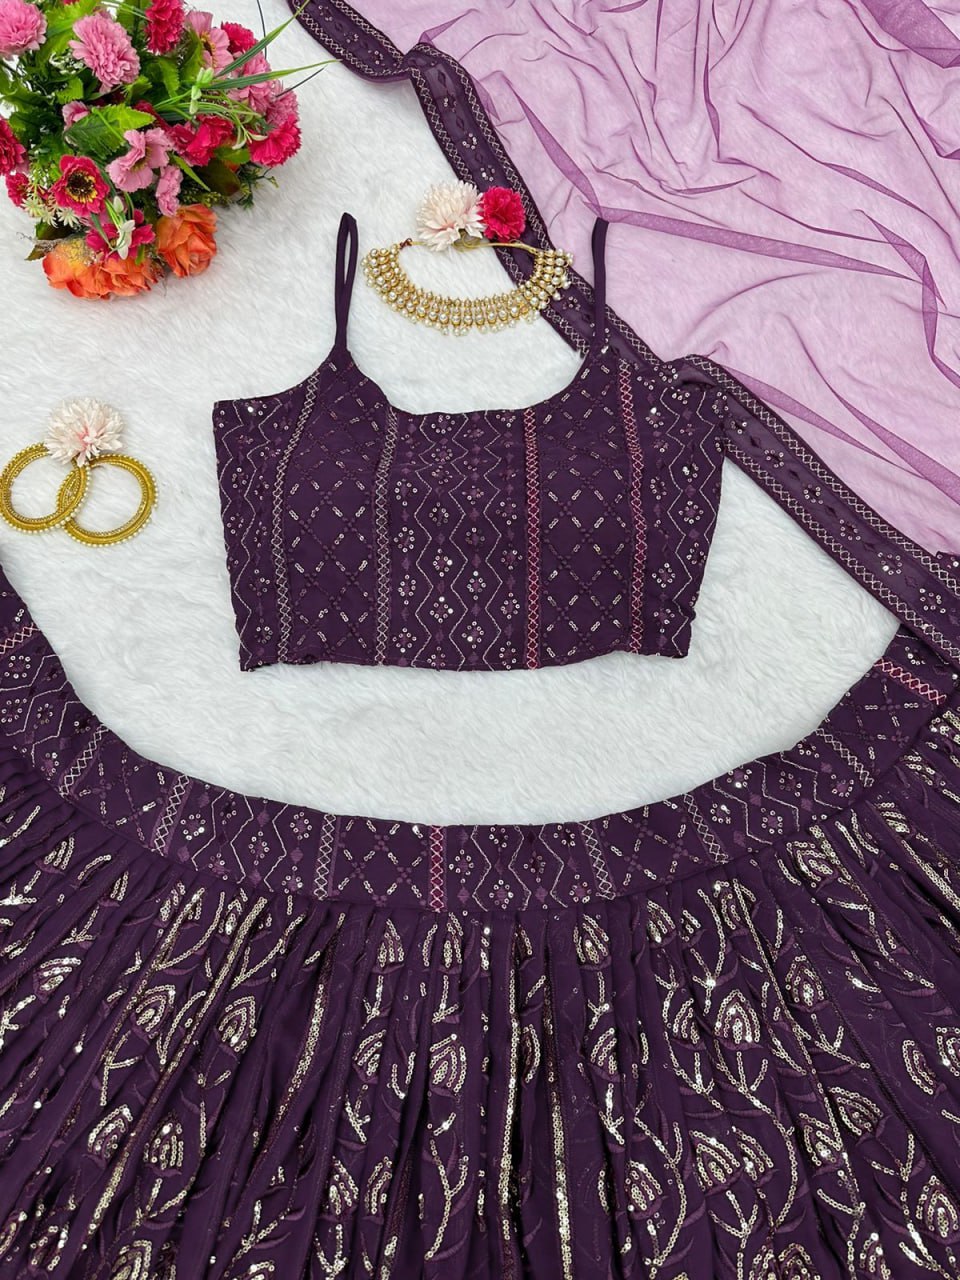 Buy Latest Purple Color Lehenga Choli Online at Best Price